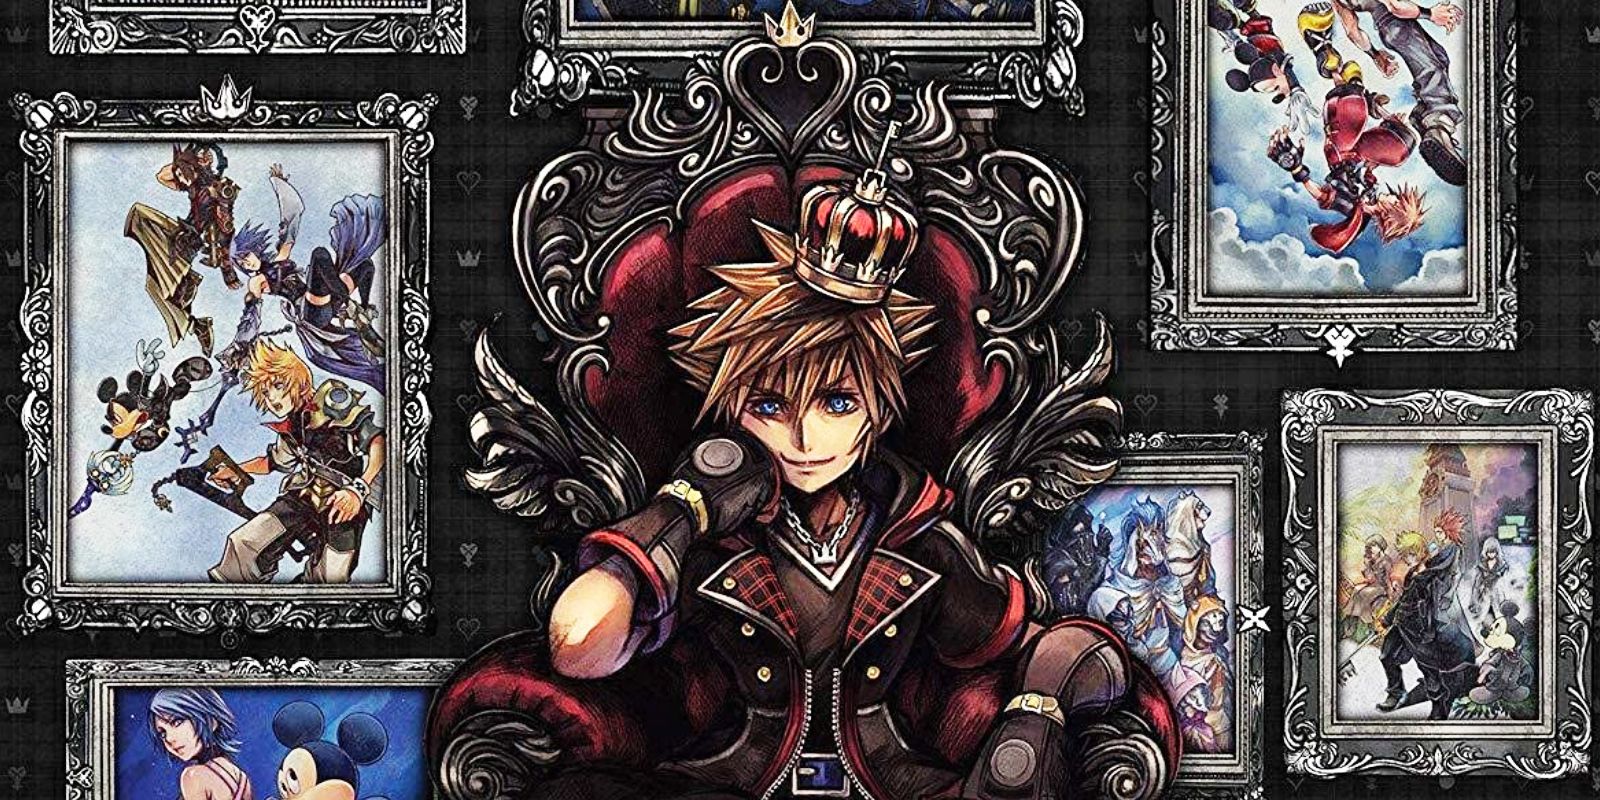 6 Games Like Kingdom Hearts To Play Next - IGN